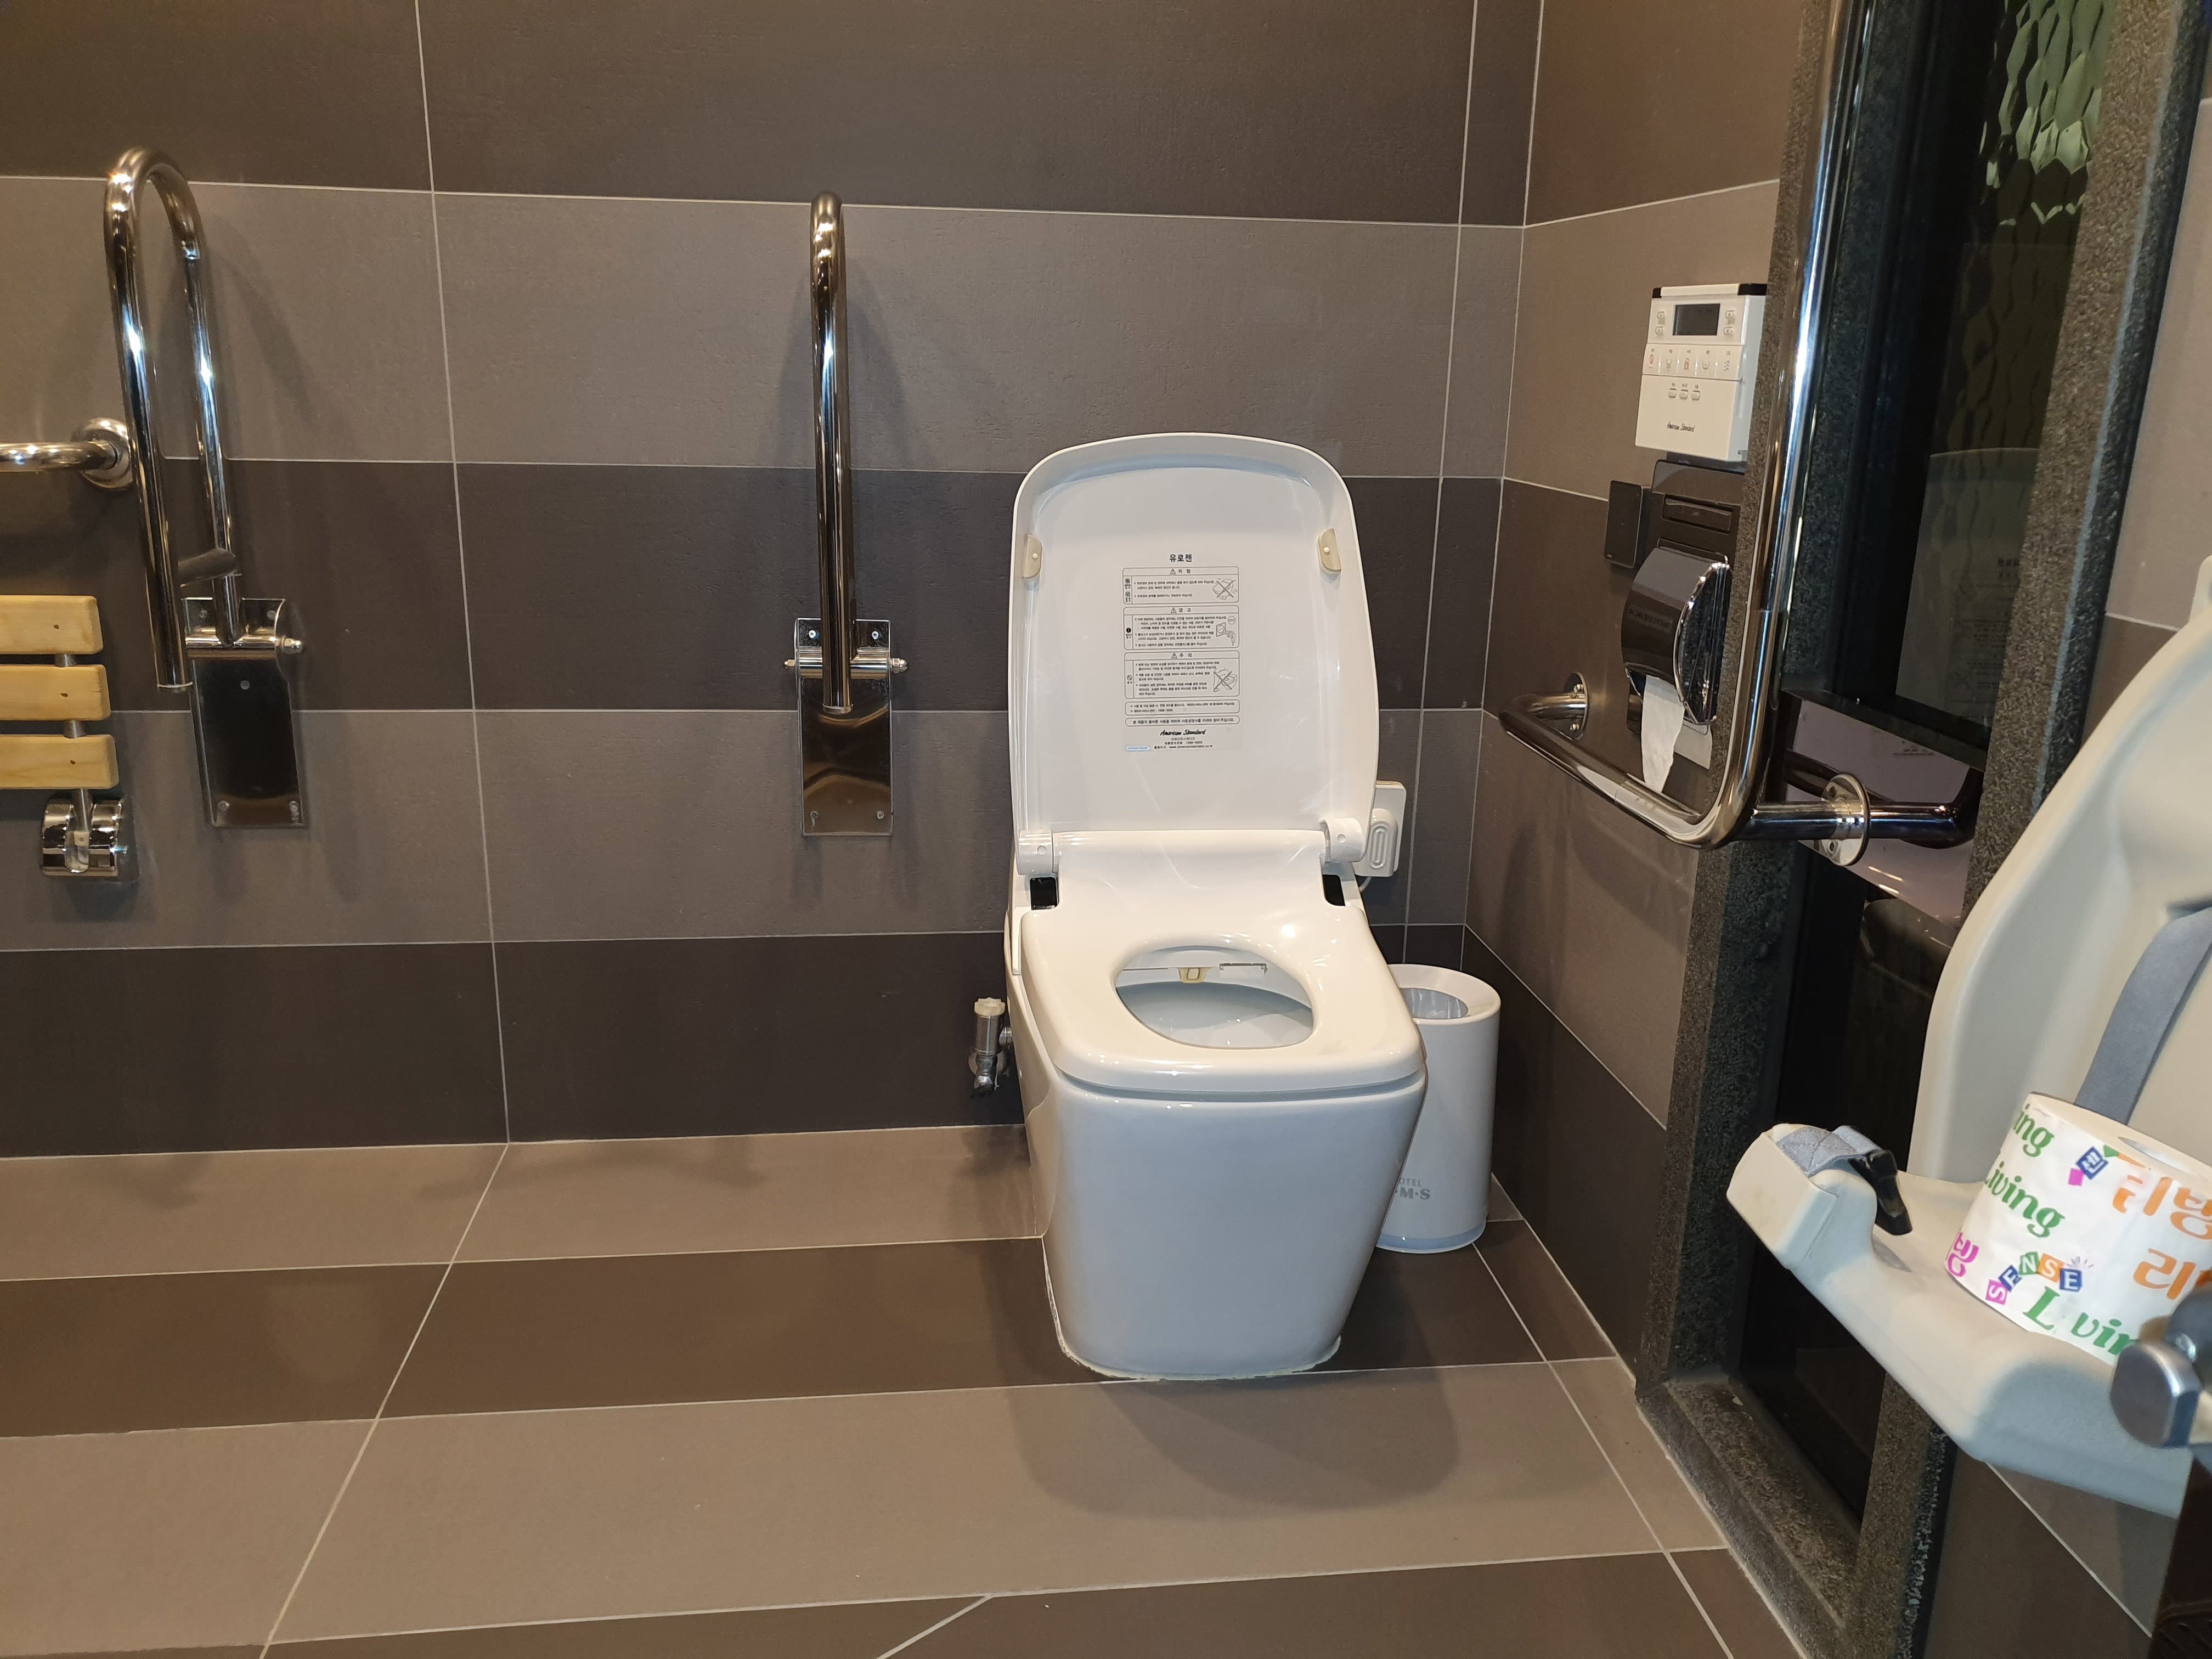 Bathroom in the guestroom0 : Toilet installed in one corner of the bathroom